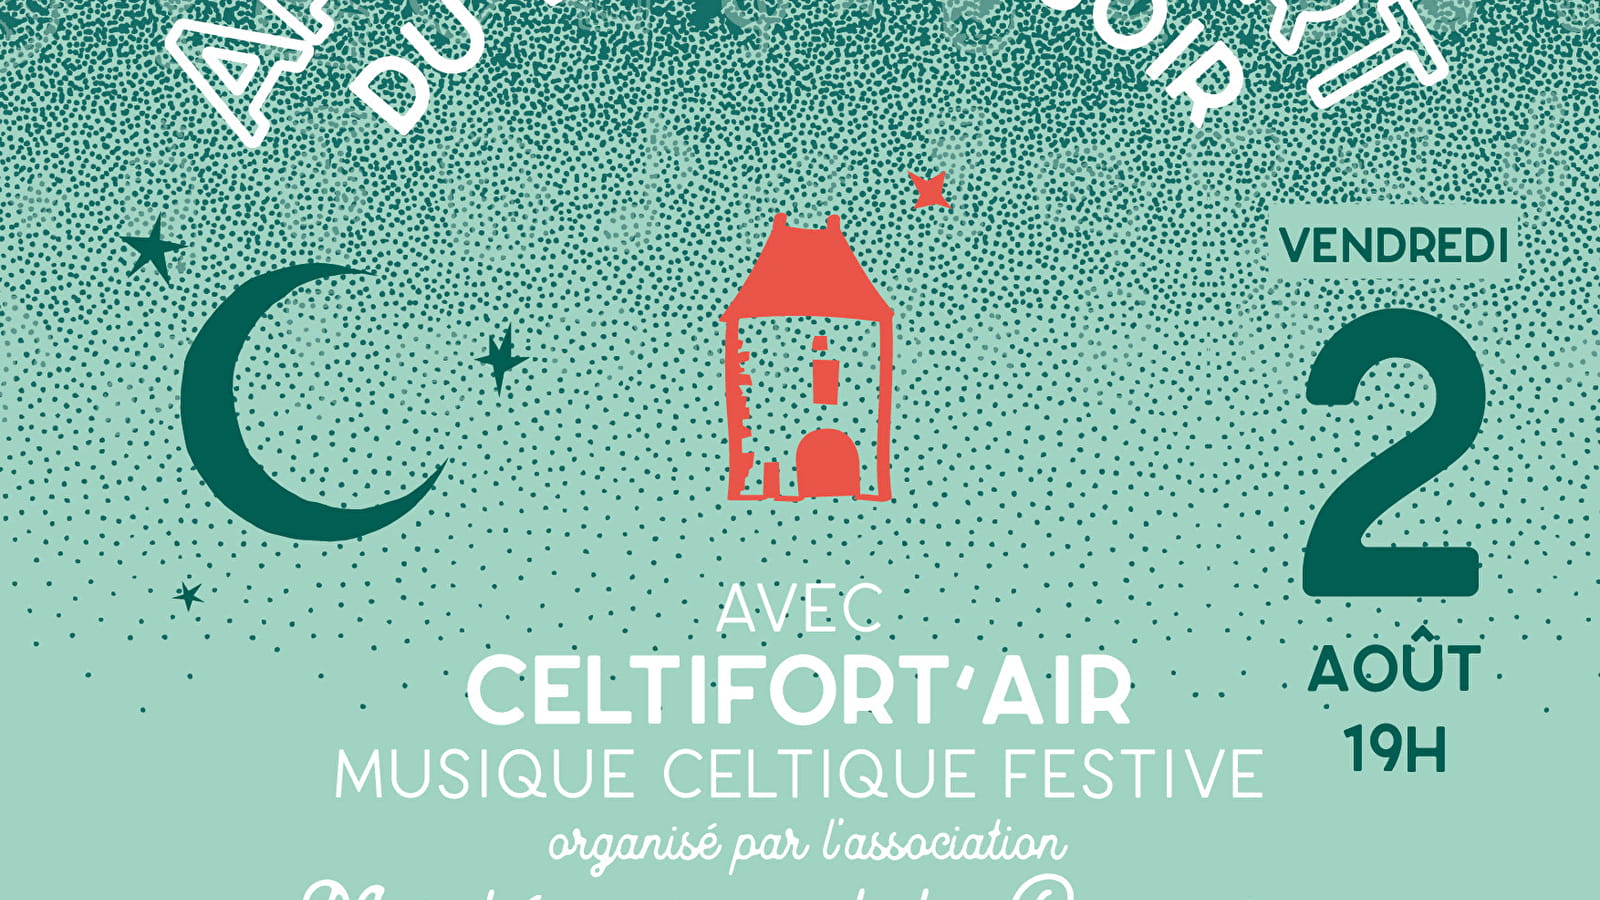 Apéro Concert - Celtifort'Air